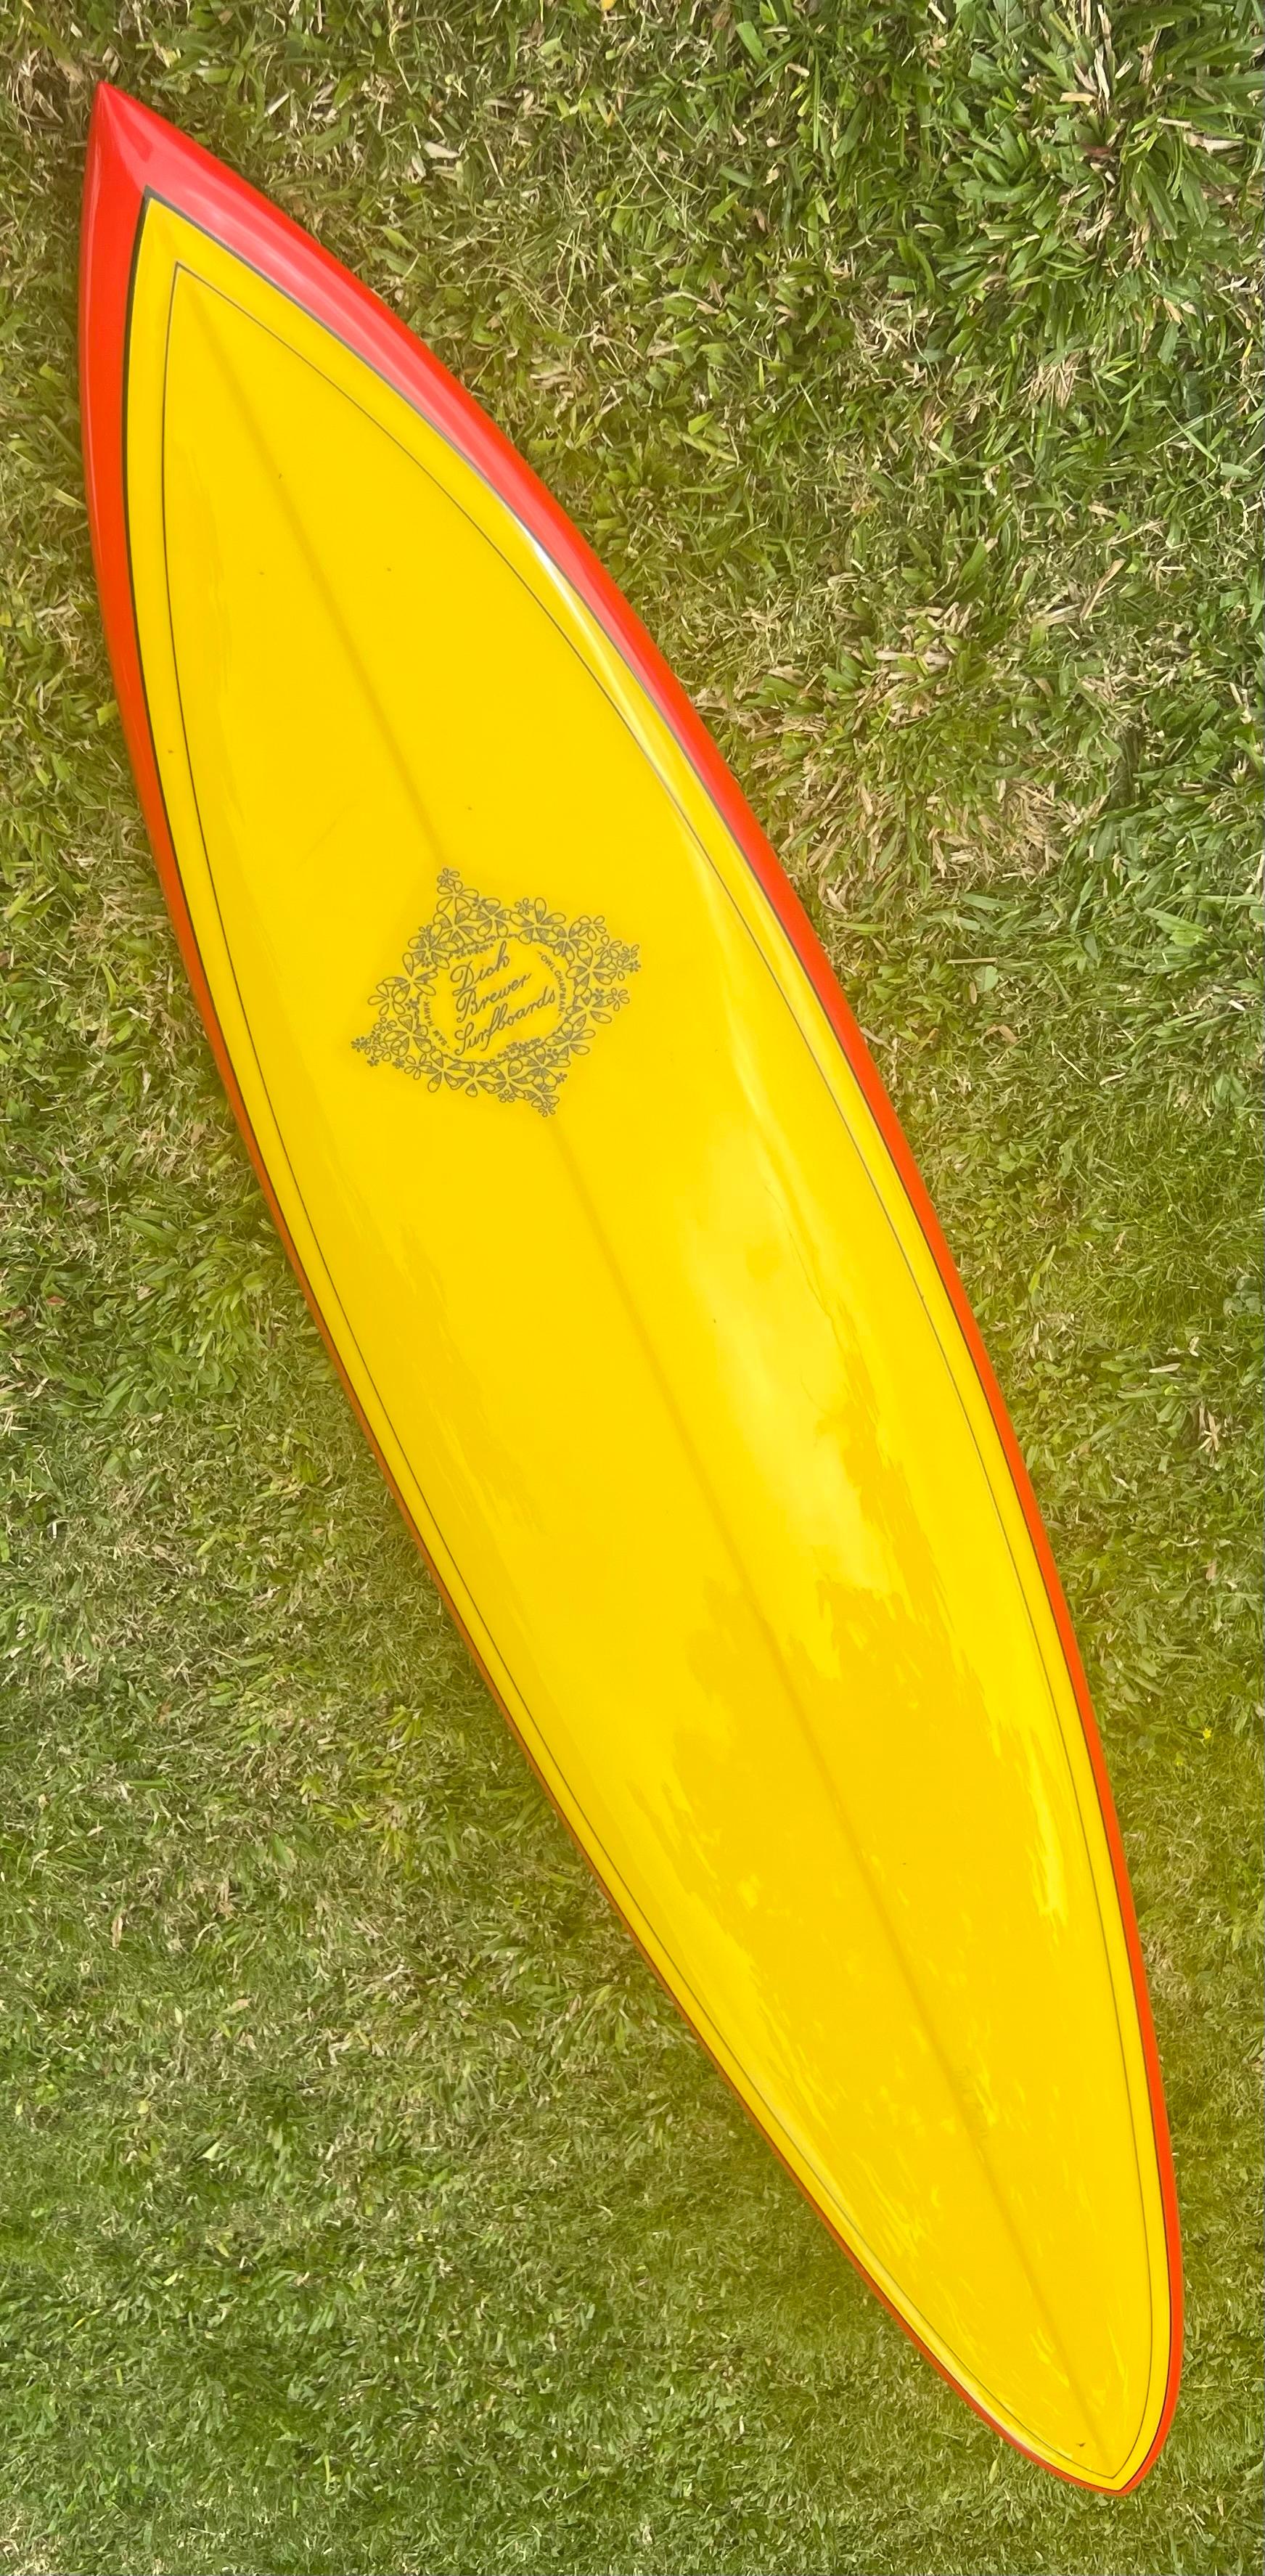 Américain 1968 Replica Lahaina Clinton Blears model surfboard by Dick Brewer en vente